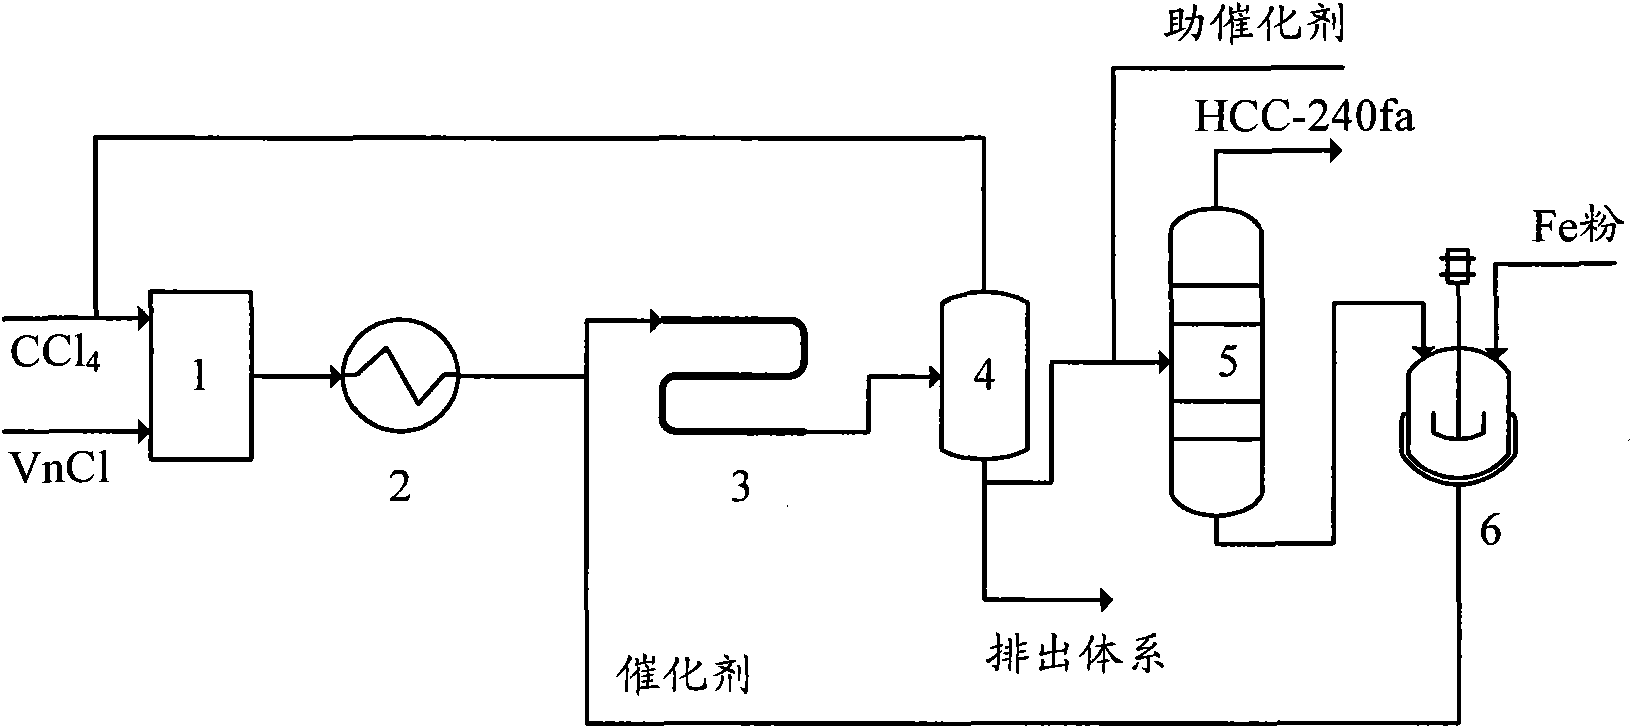 Production method of 1,1,1,3,3-pentachloropropane